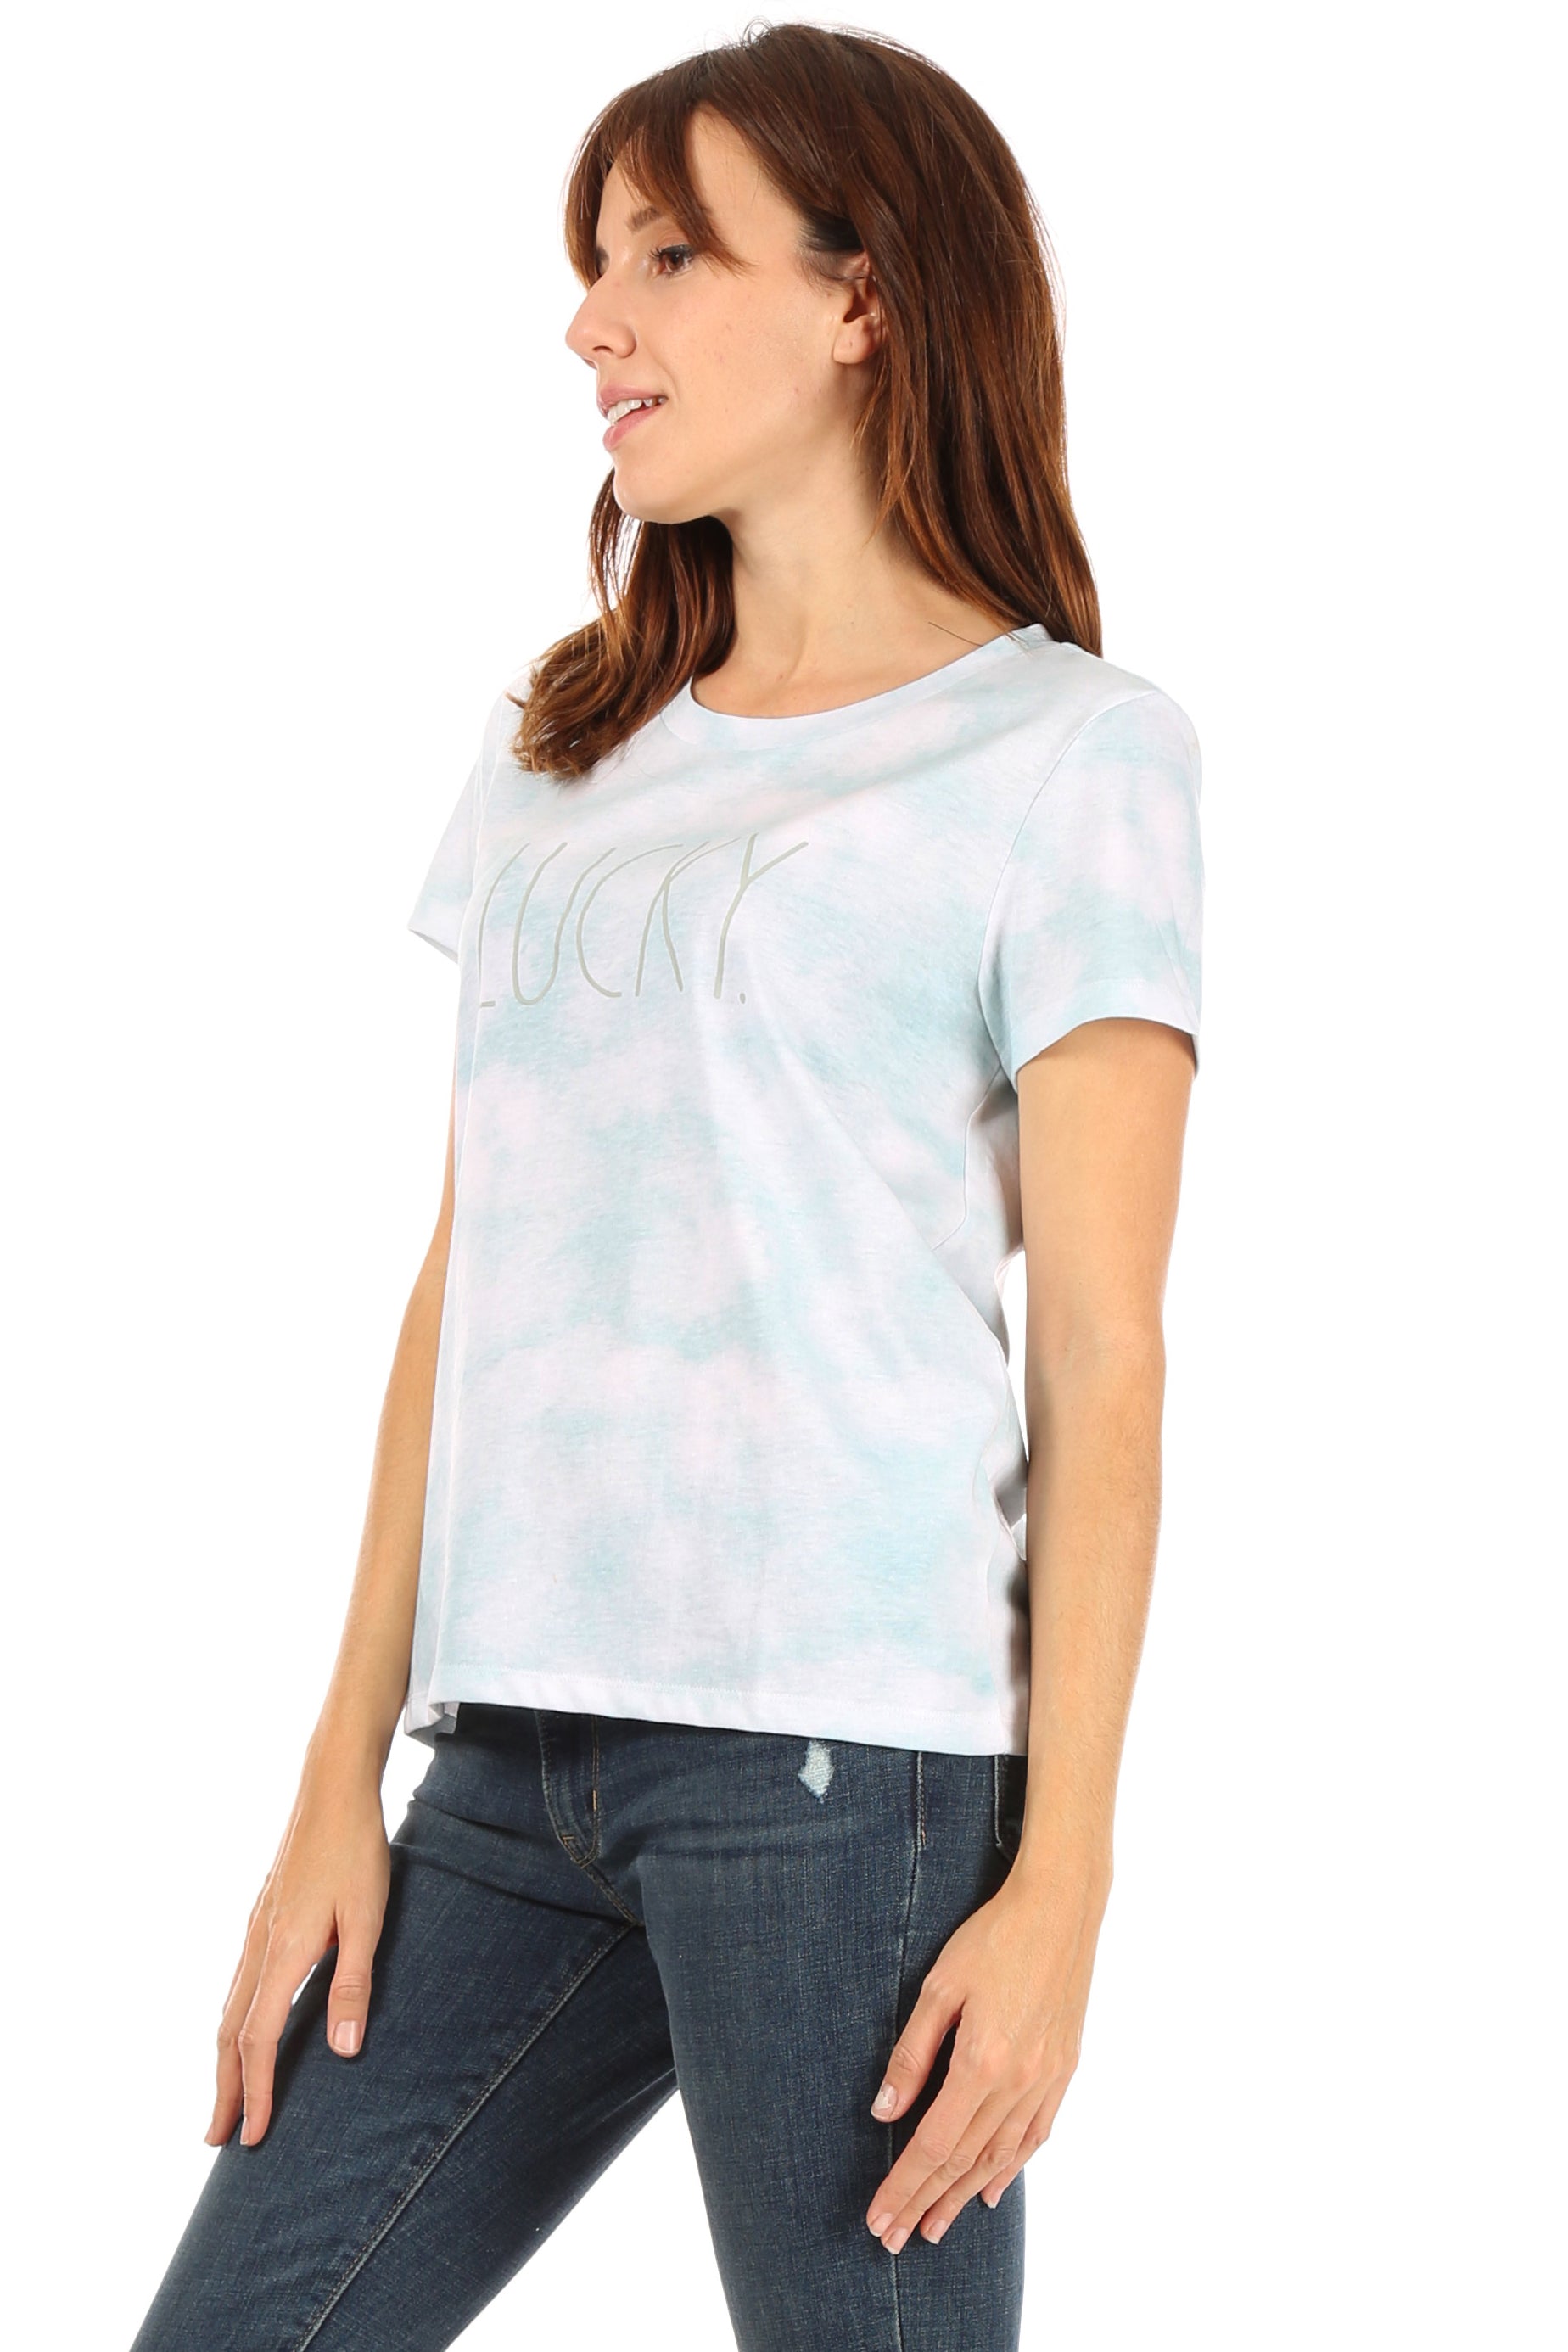 Women's "LUCKY" Short Sleeve Icon T-Shirt - Shop Rae Dunn Apparel and Sleepwear